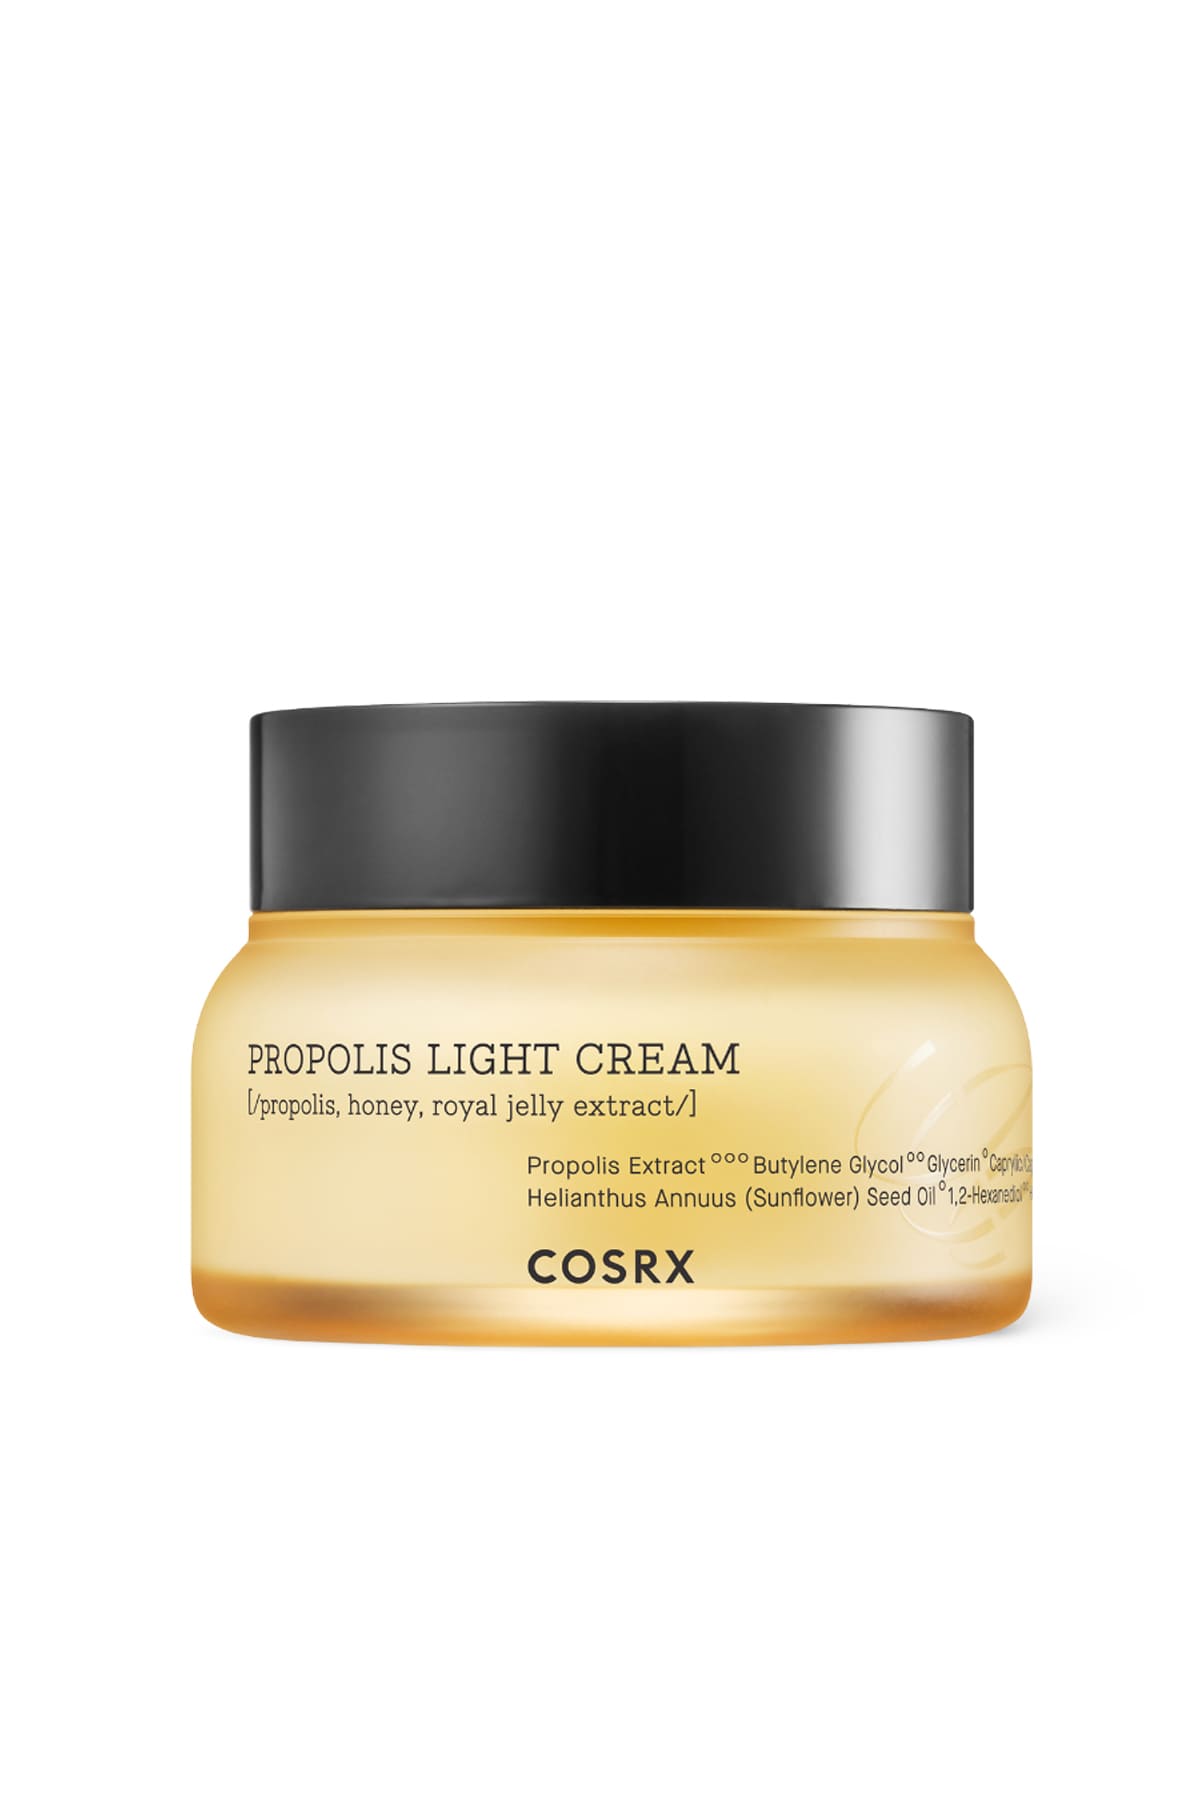 Cosrx Propolis Light Cream - Besleyici Propolis Kremi